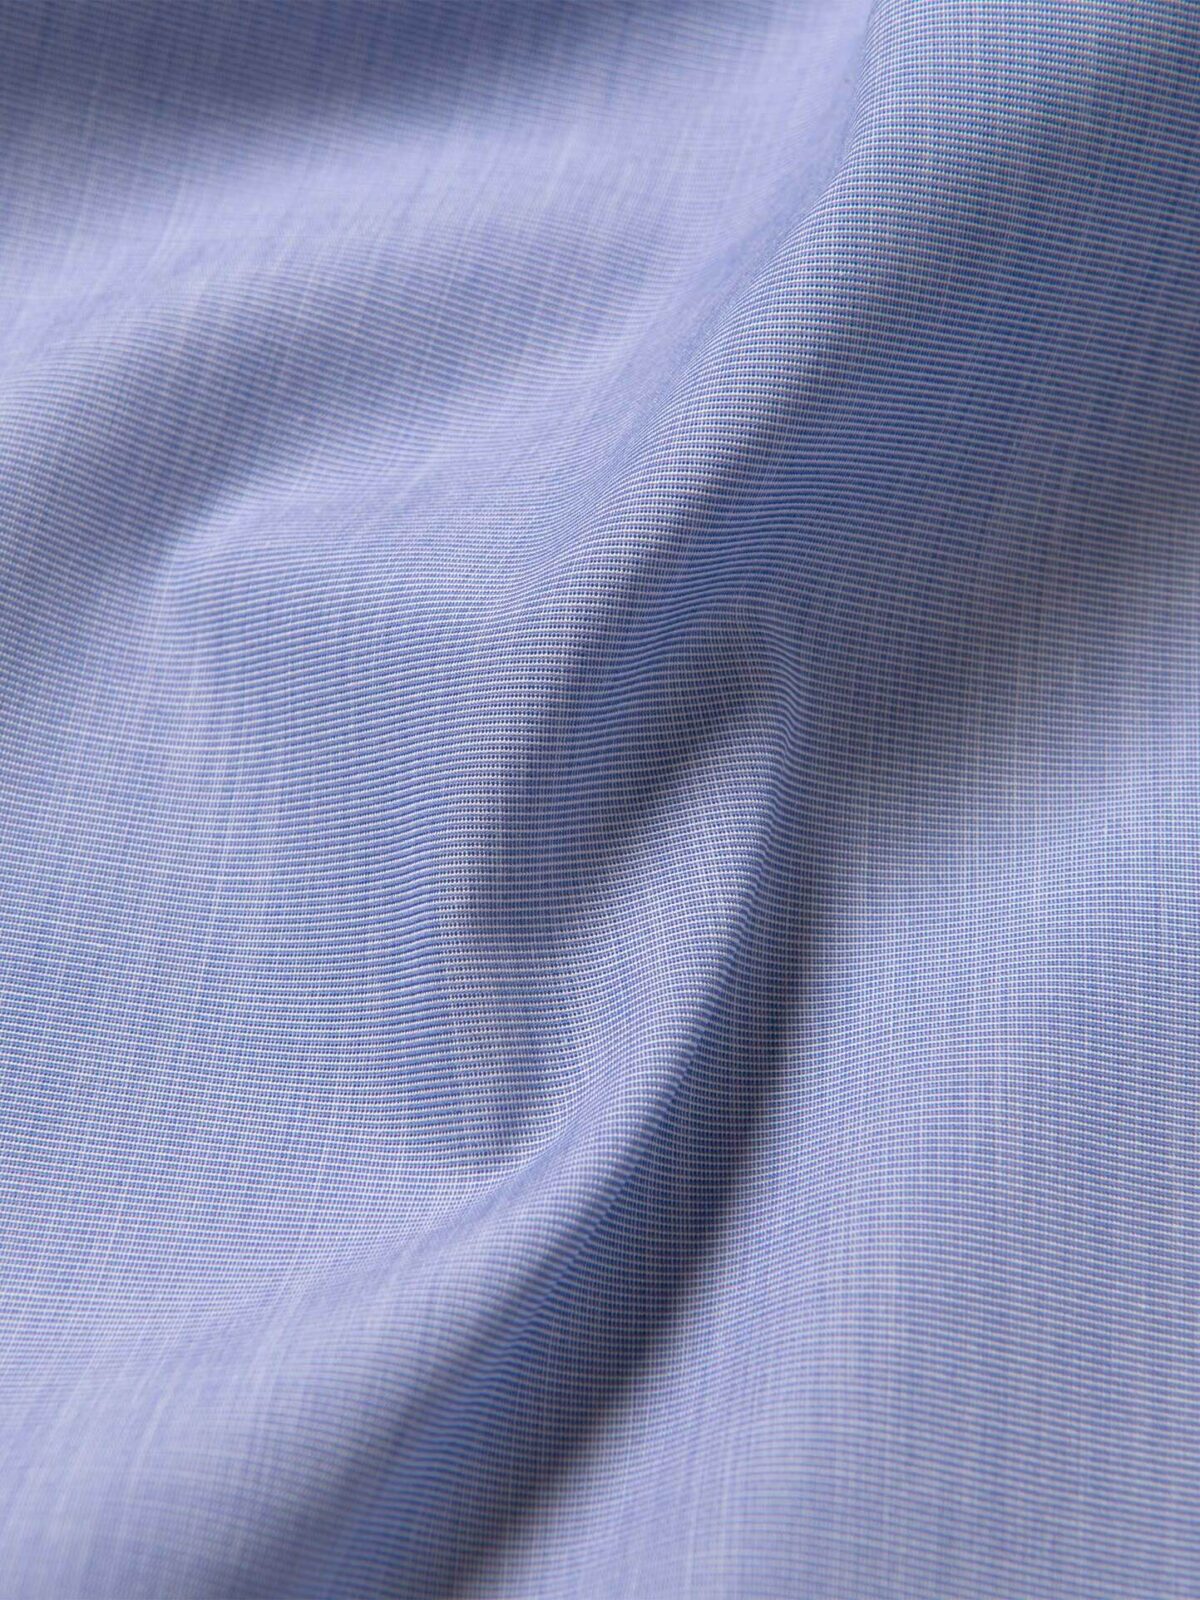 Thomas Mason Luxury Blue End-on-End Shirts by Proper Cloth